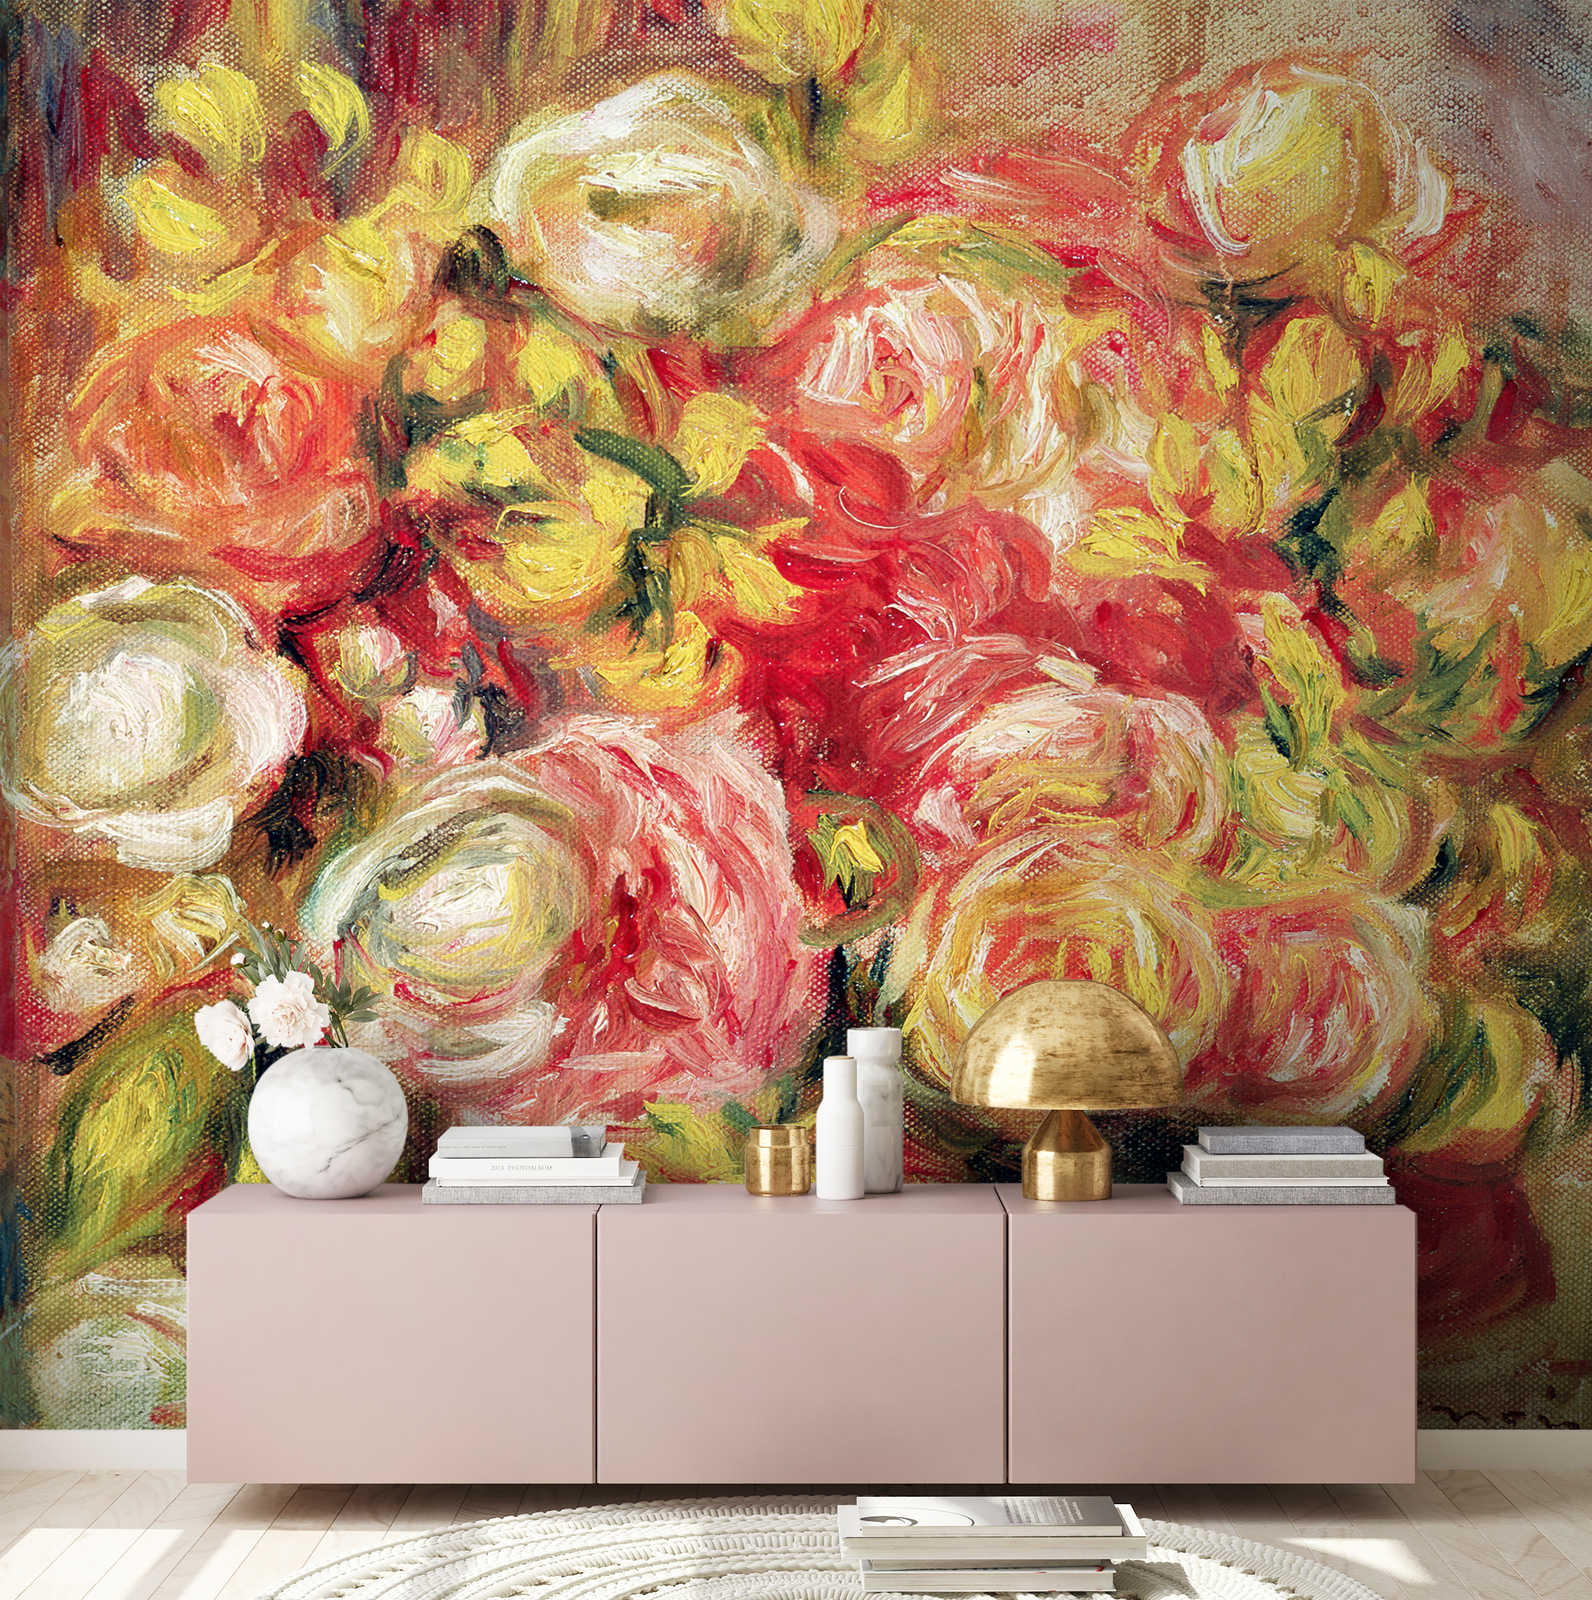             Rosa in vaso", murale di Pierre Auguste Renoir
        